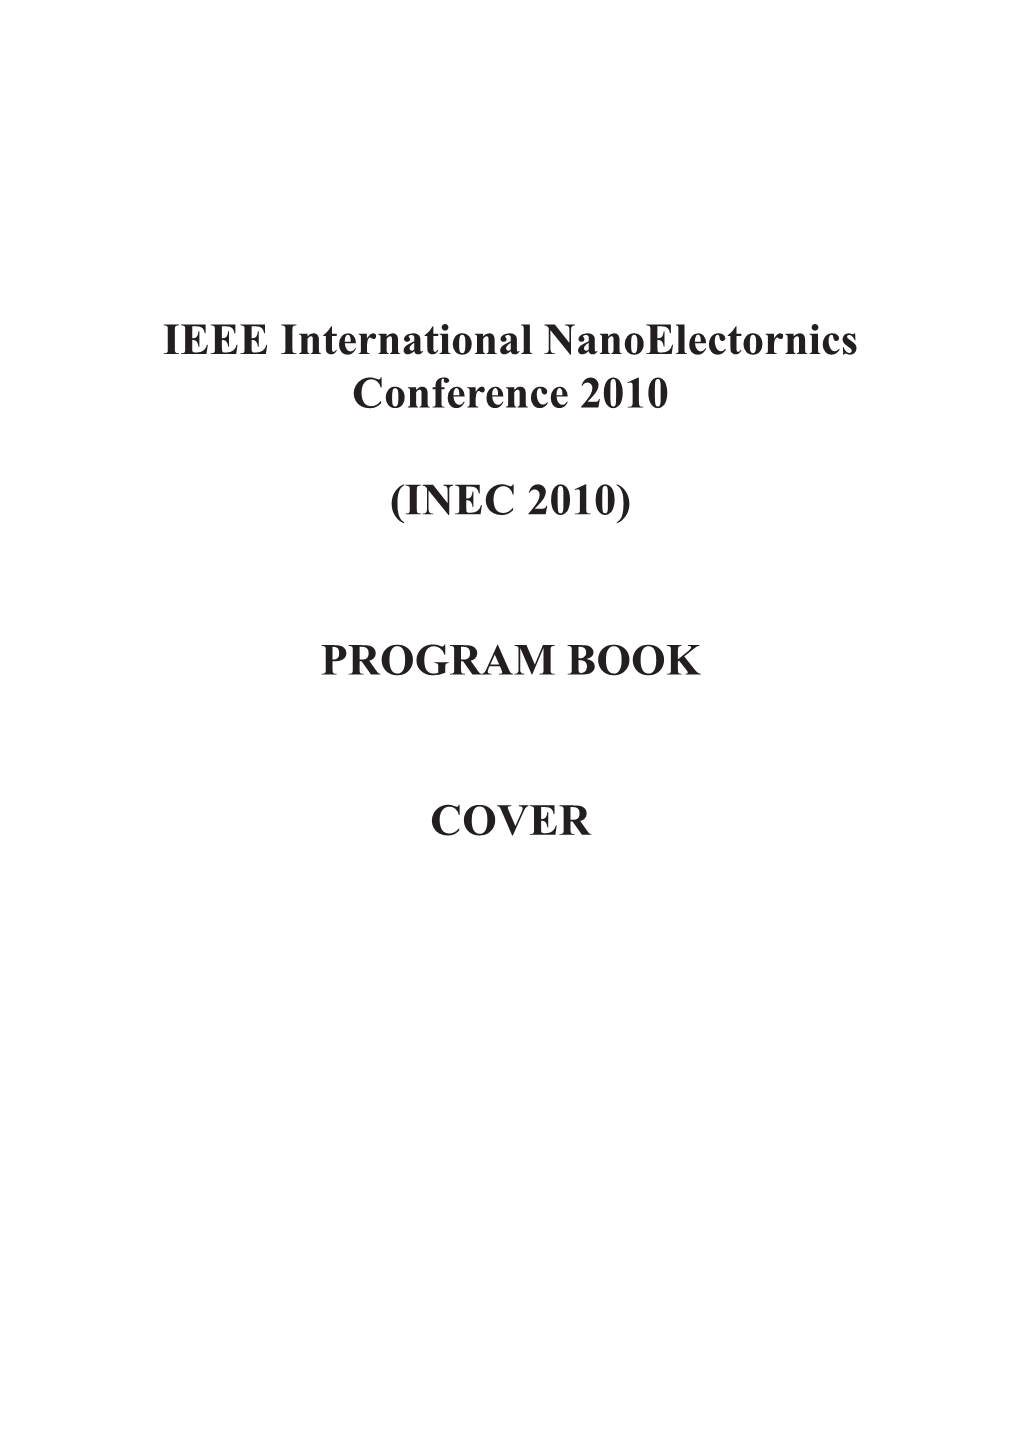 IEEE International Nanoelectornics Conference 2010 (INEC 2010)